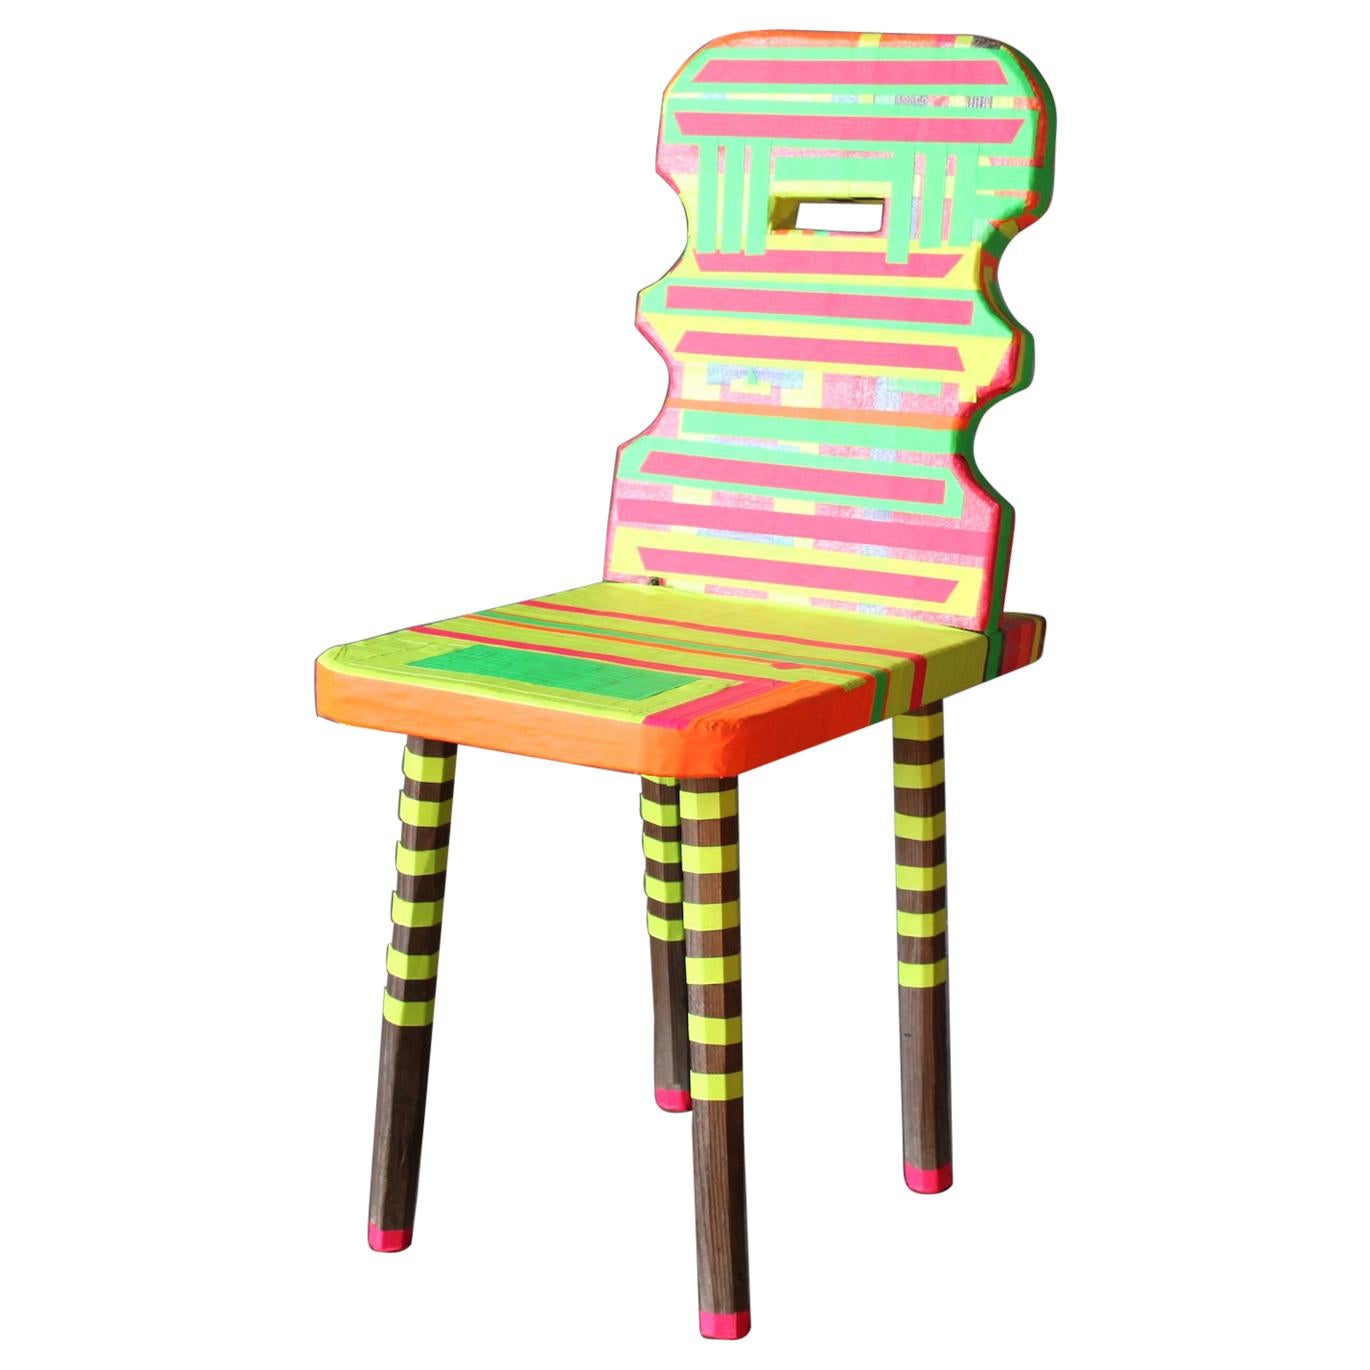 Peak of a Century, Functional Art Chair by German Artist Markus Friedrich Staab For Sale